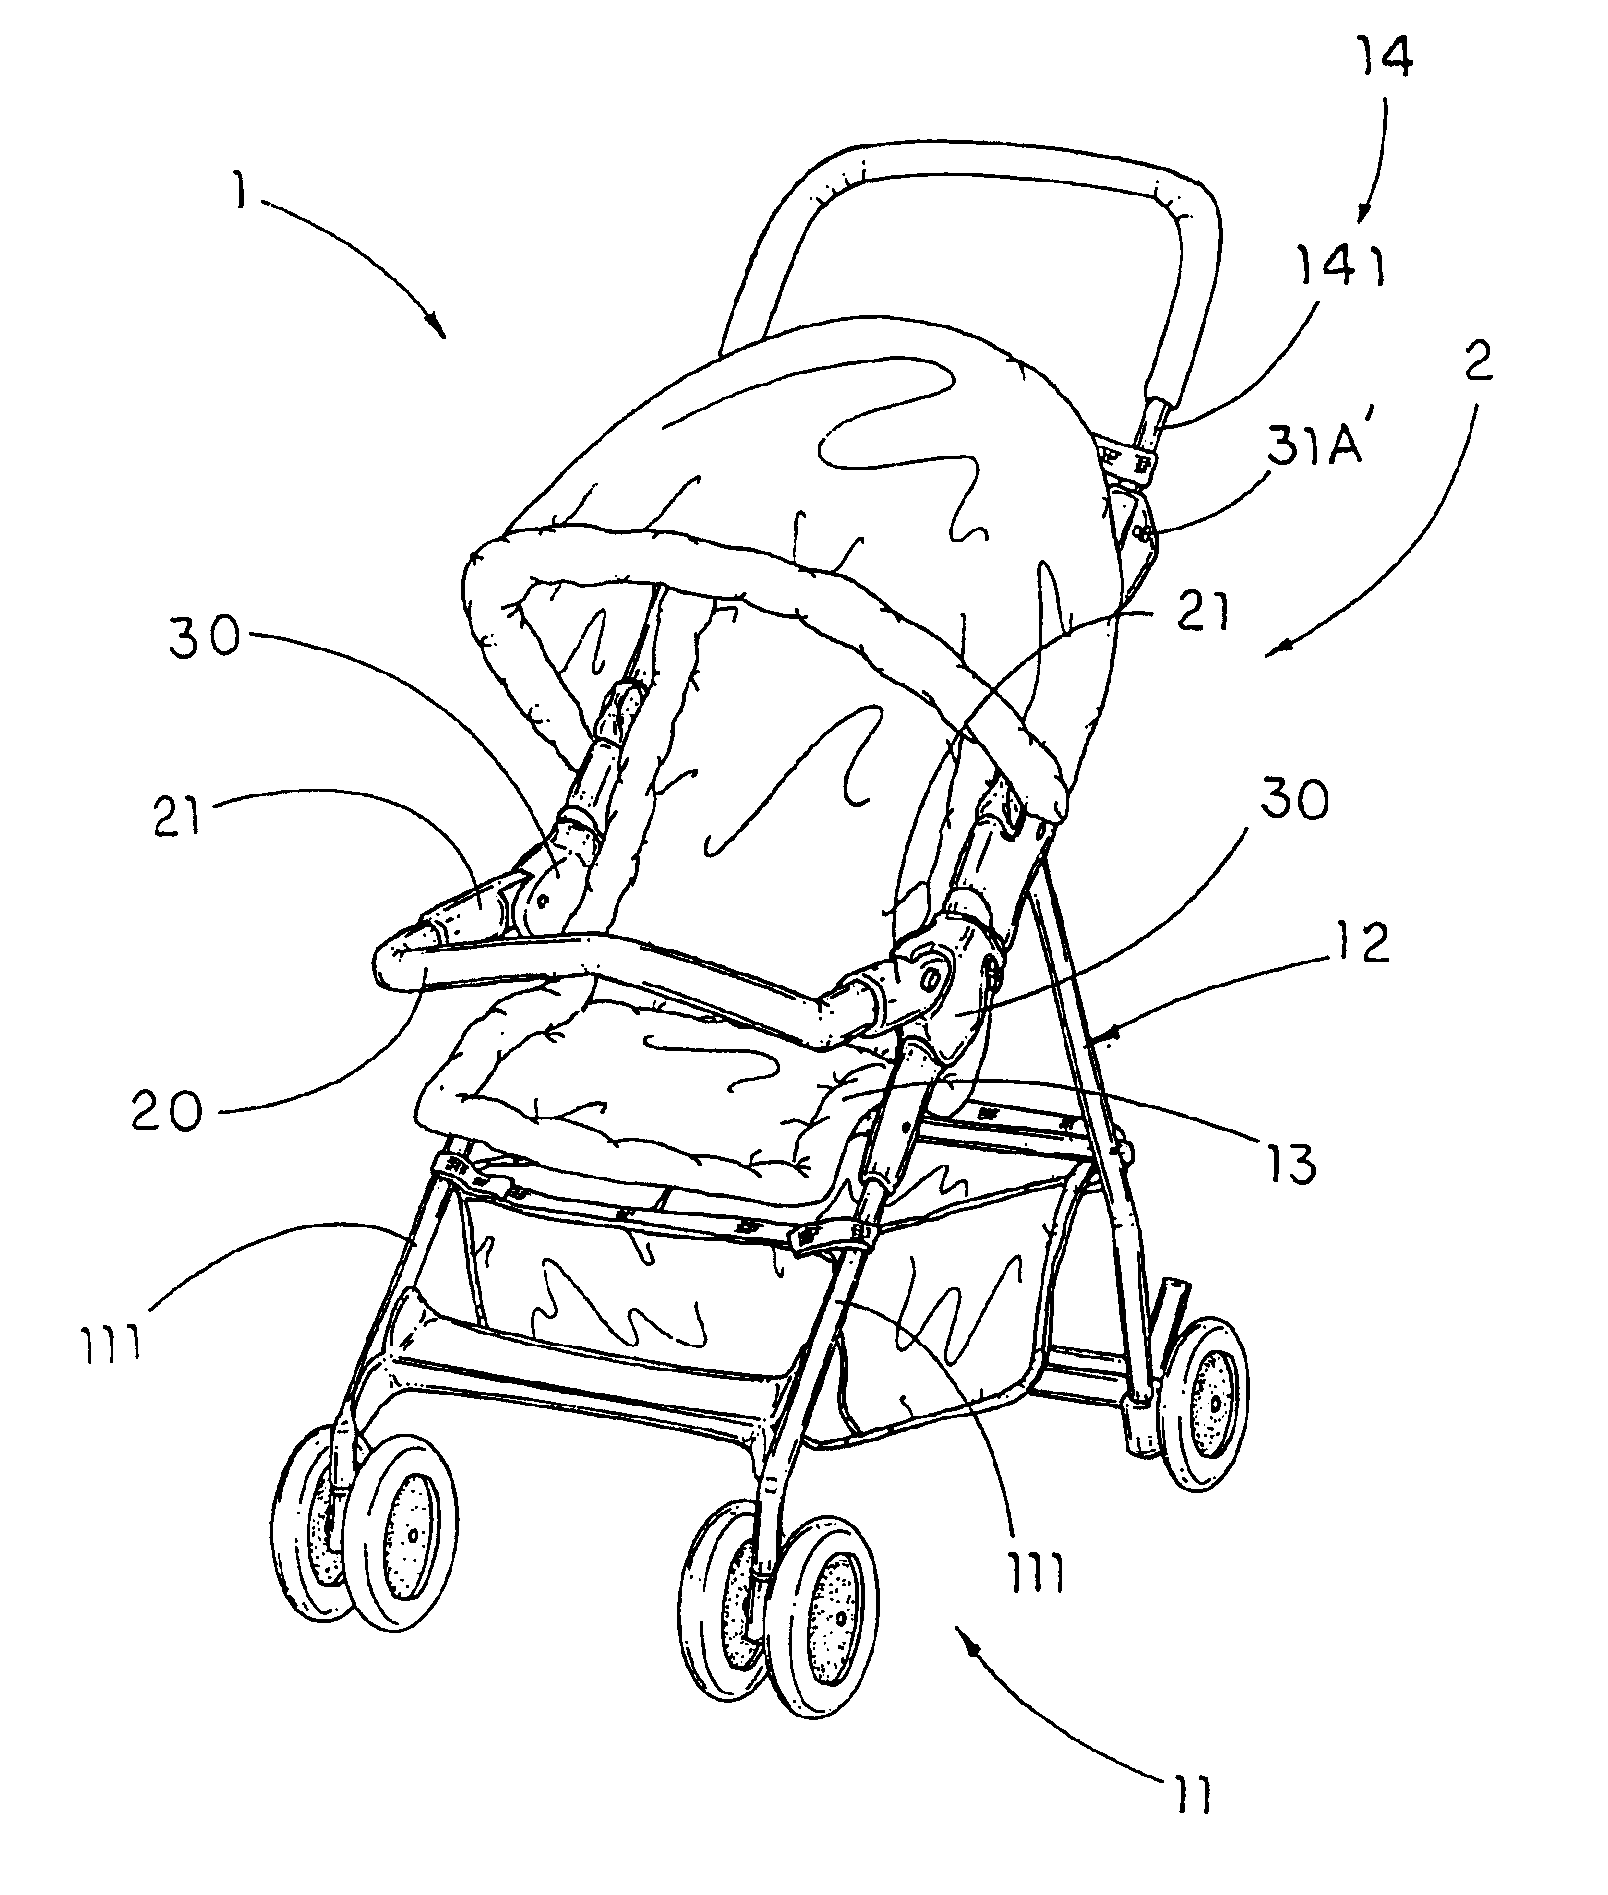 Detachable front guider arrangement of stroller